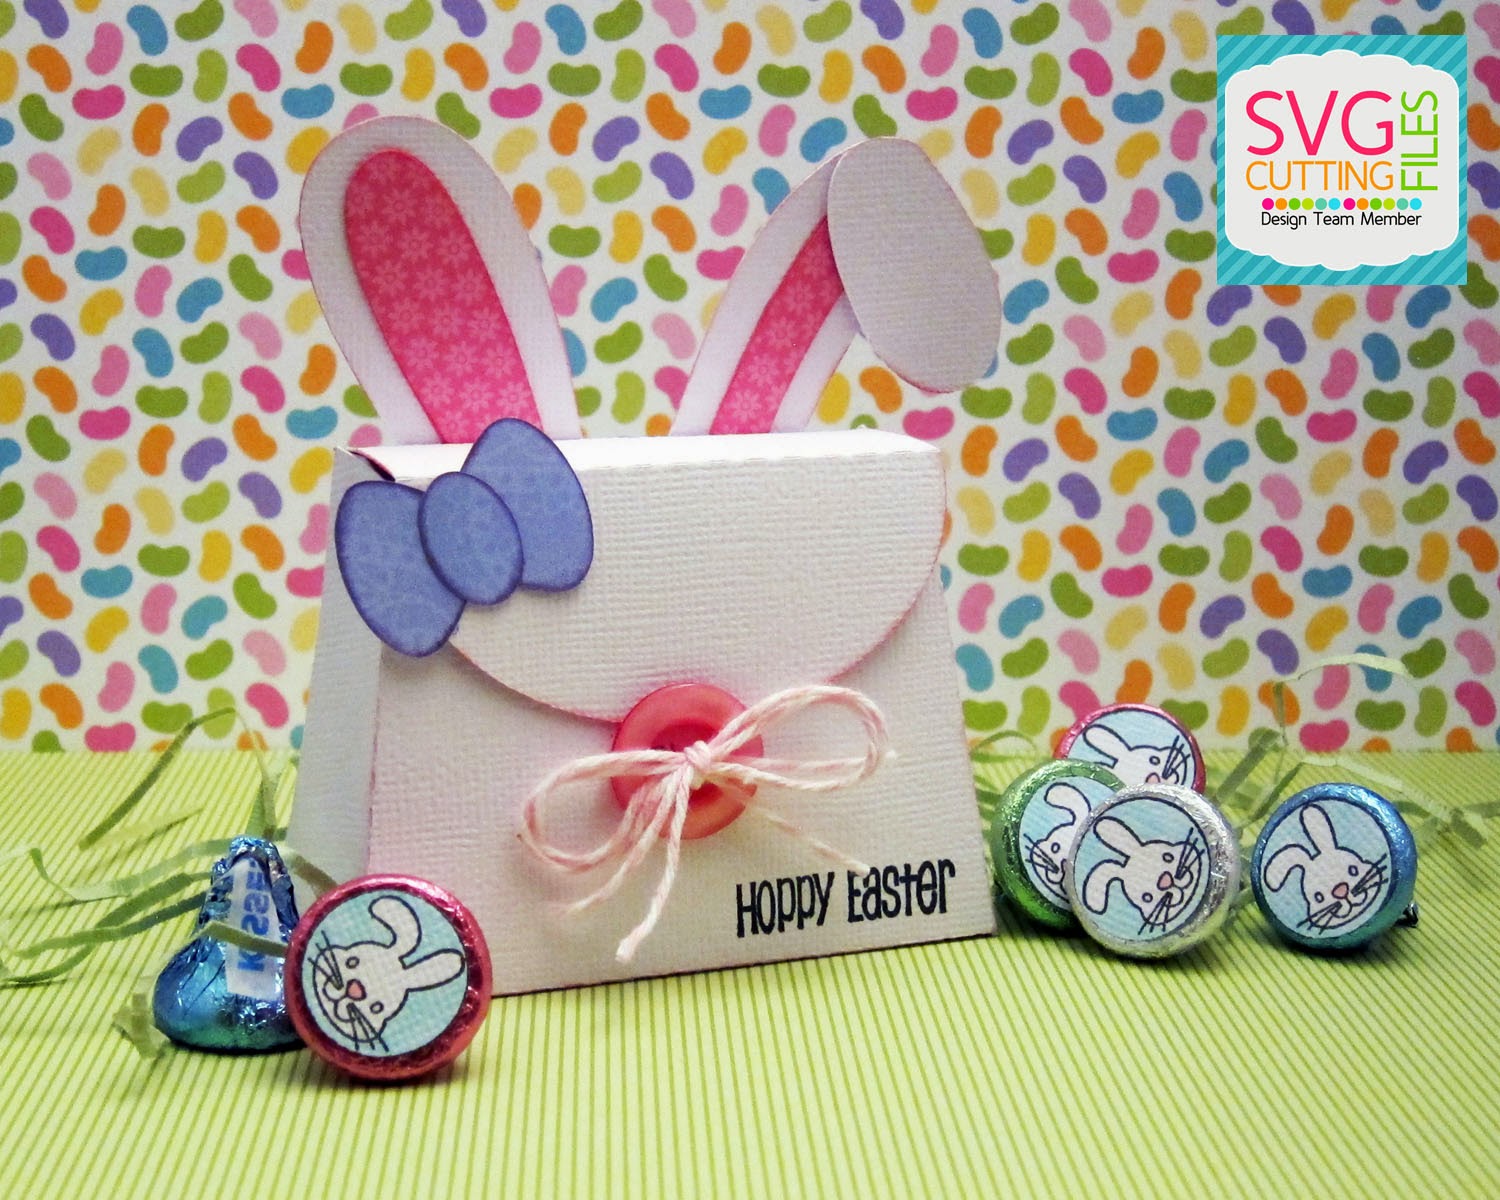 SVG Cutting Files: Hoppy Easter!